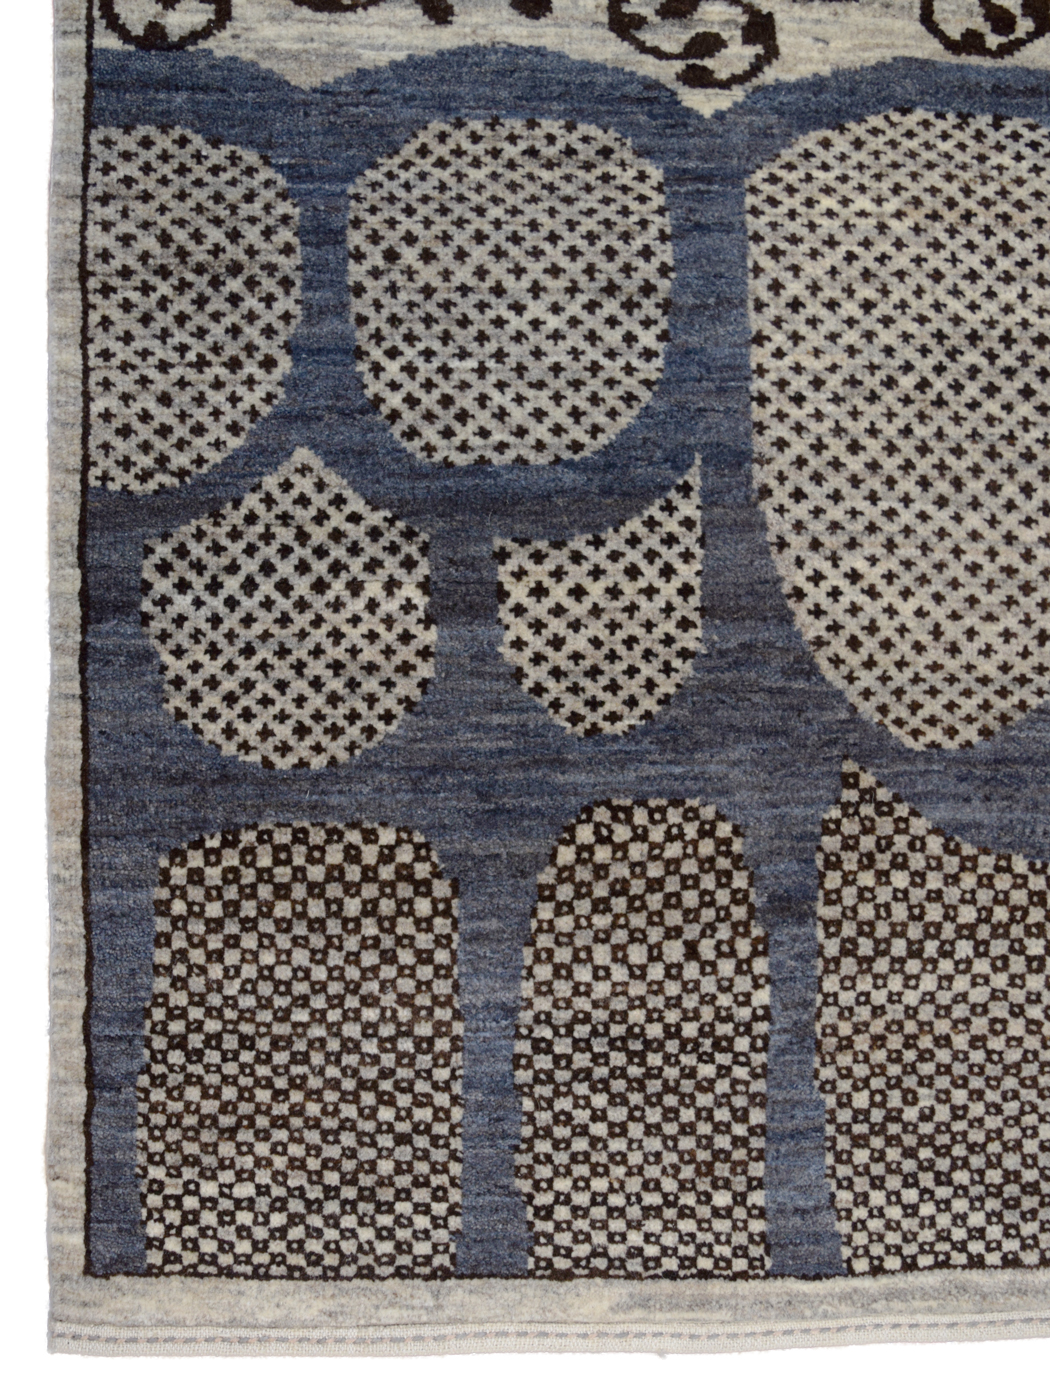 Strata – Architectural Modern Persian Carpet – Gray-Brown, Cream Wool - corner photo